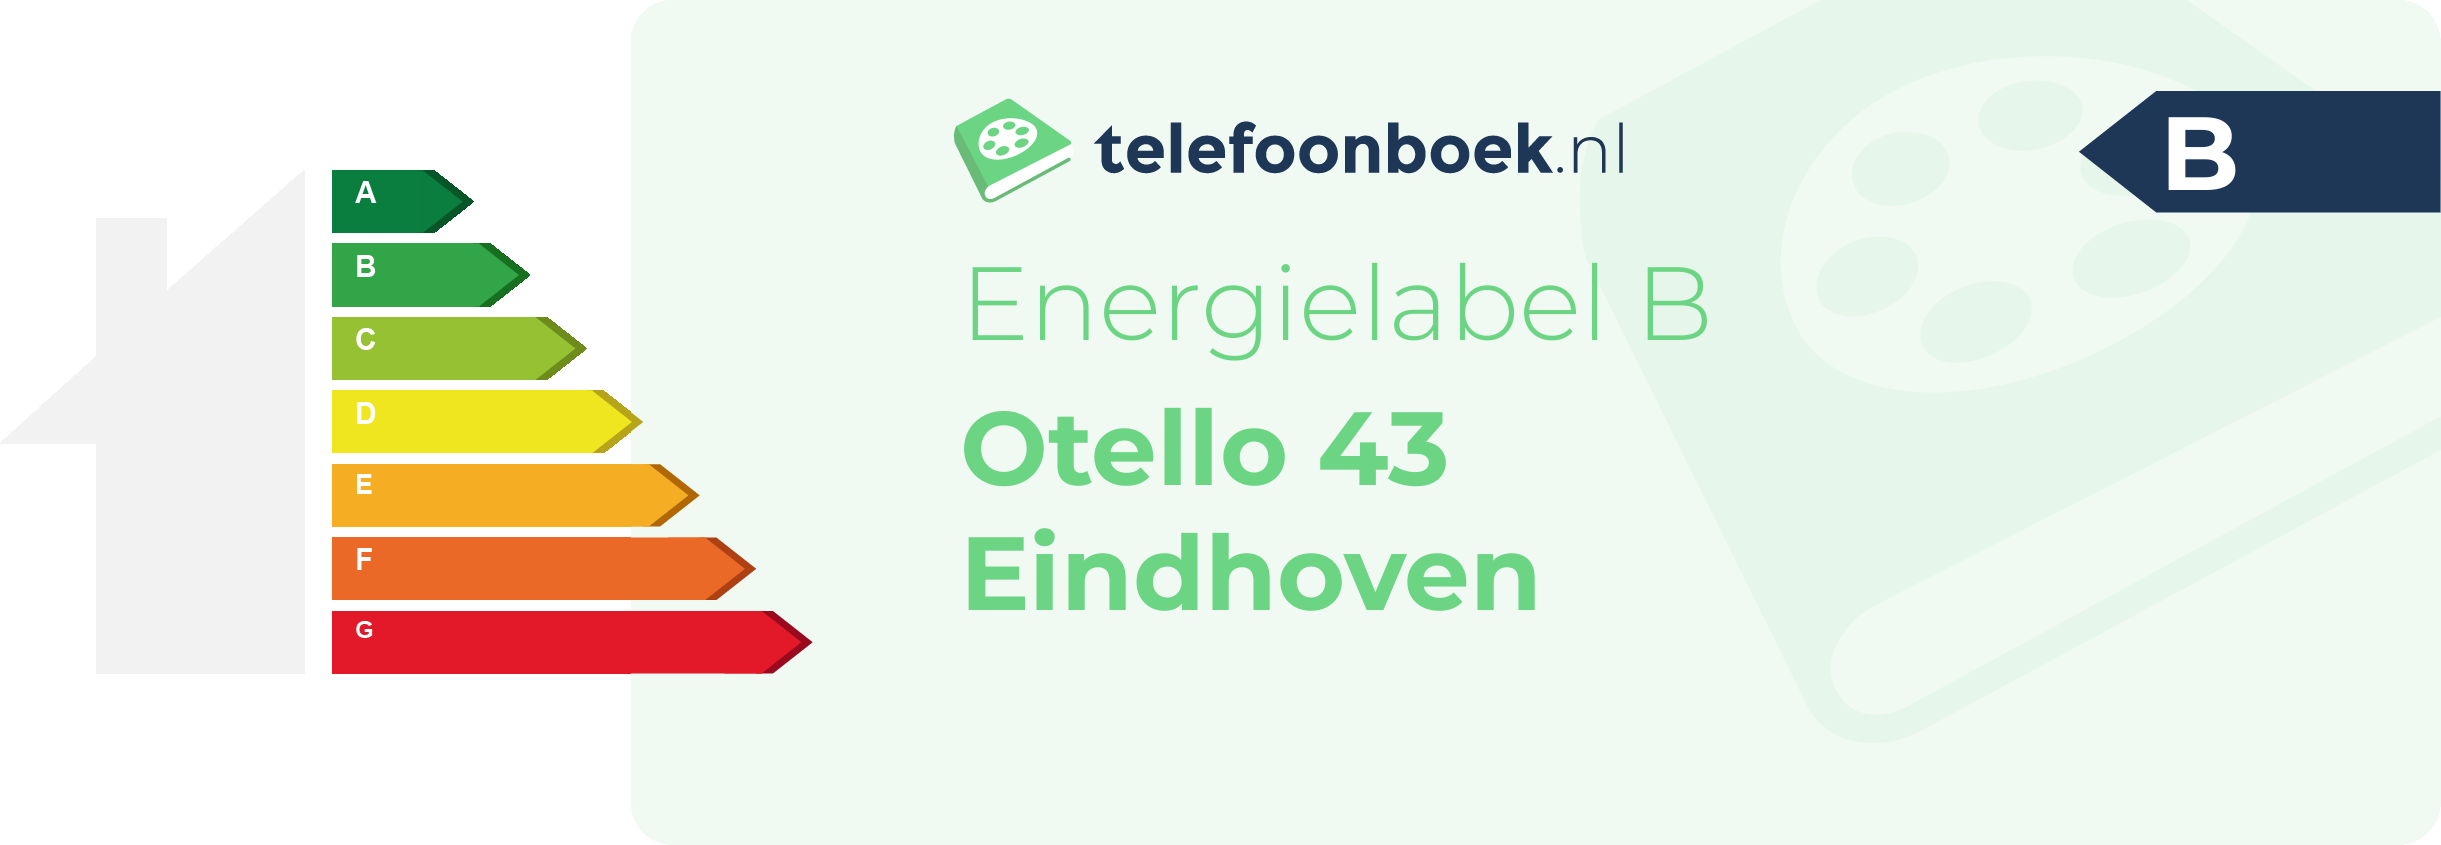 Energielabel Otello 43 Eindhoven